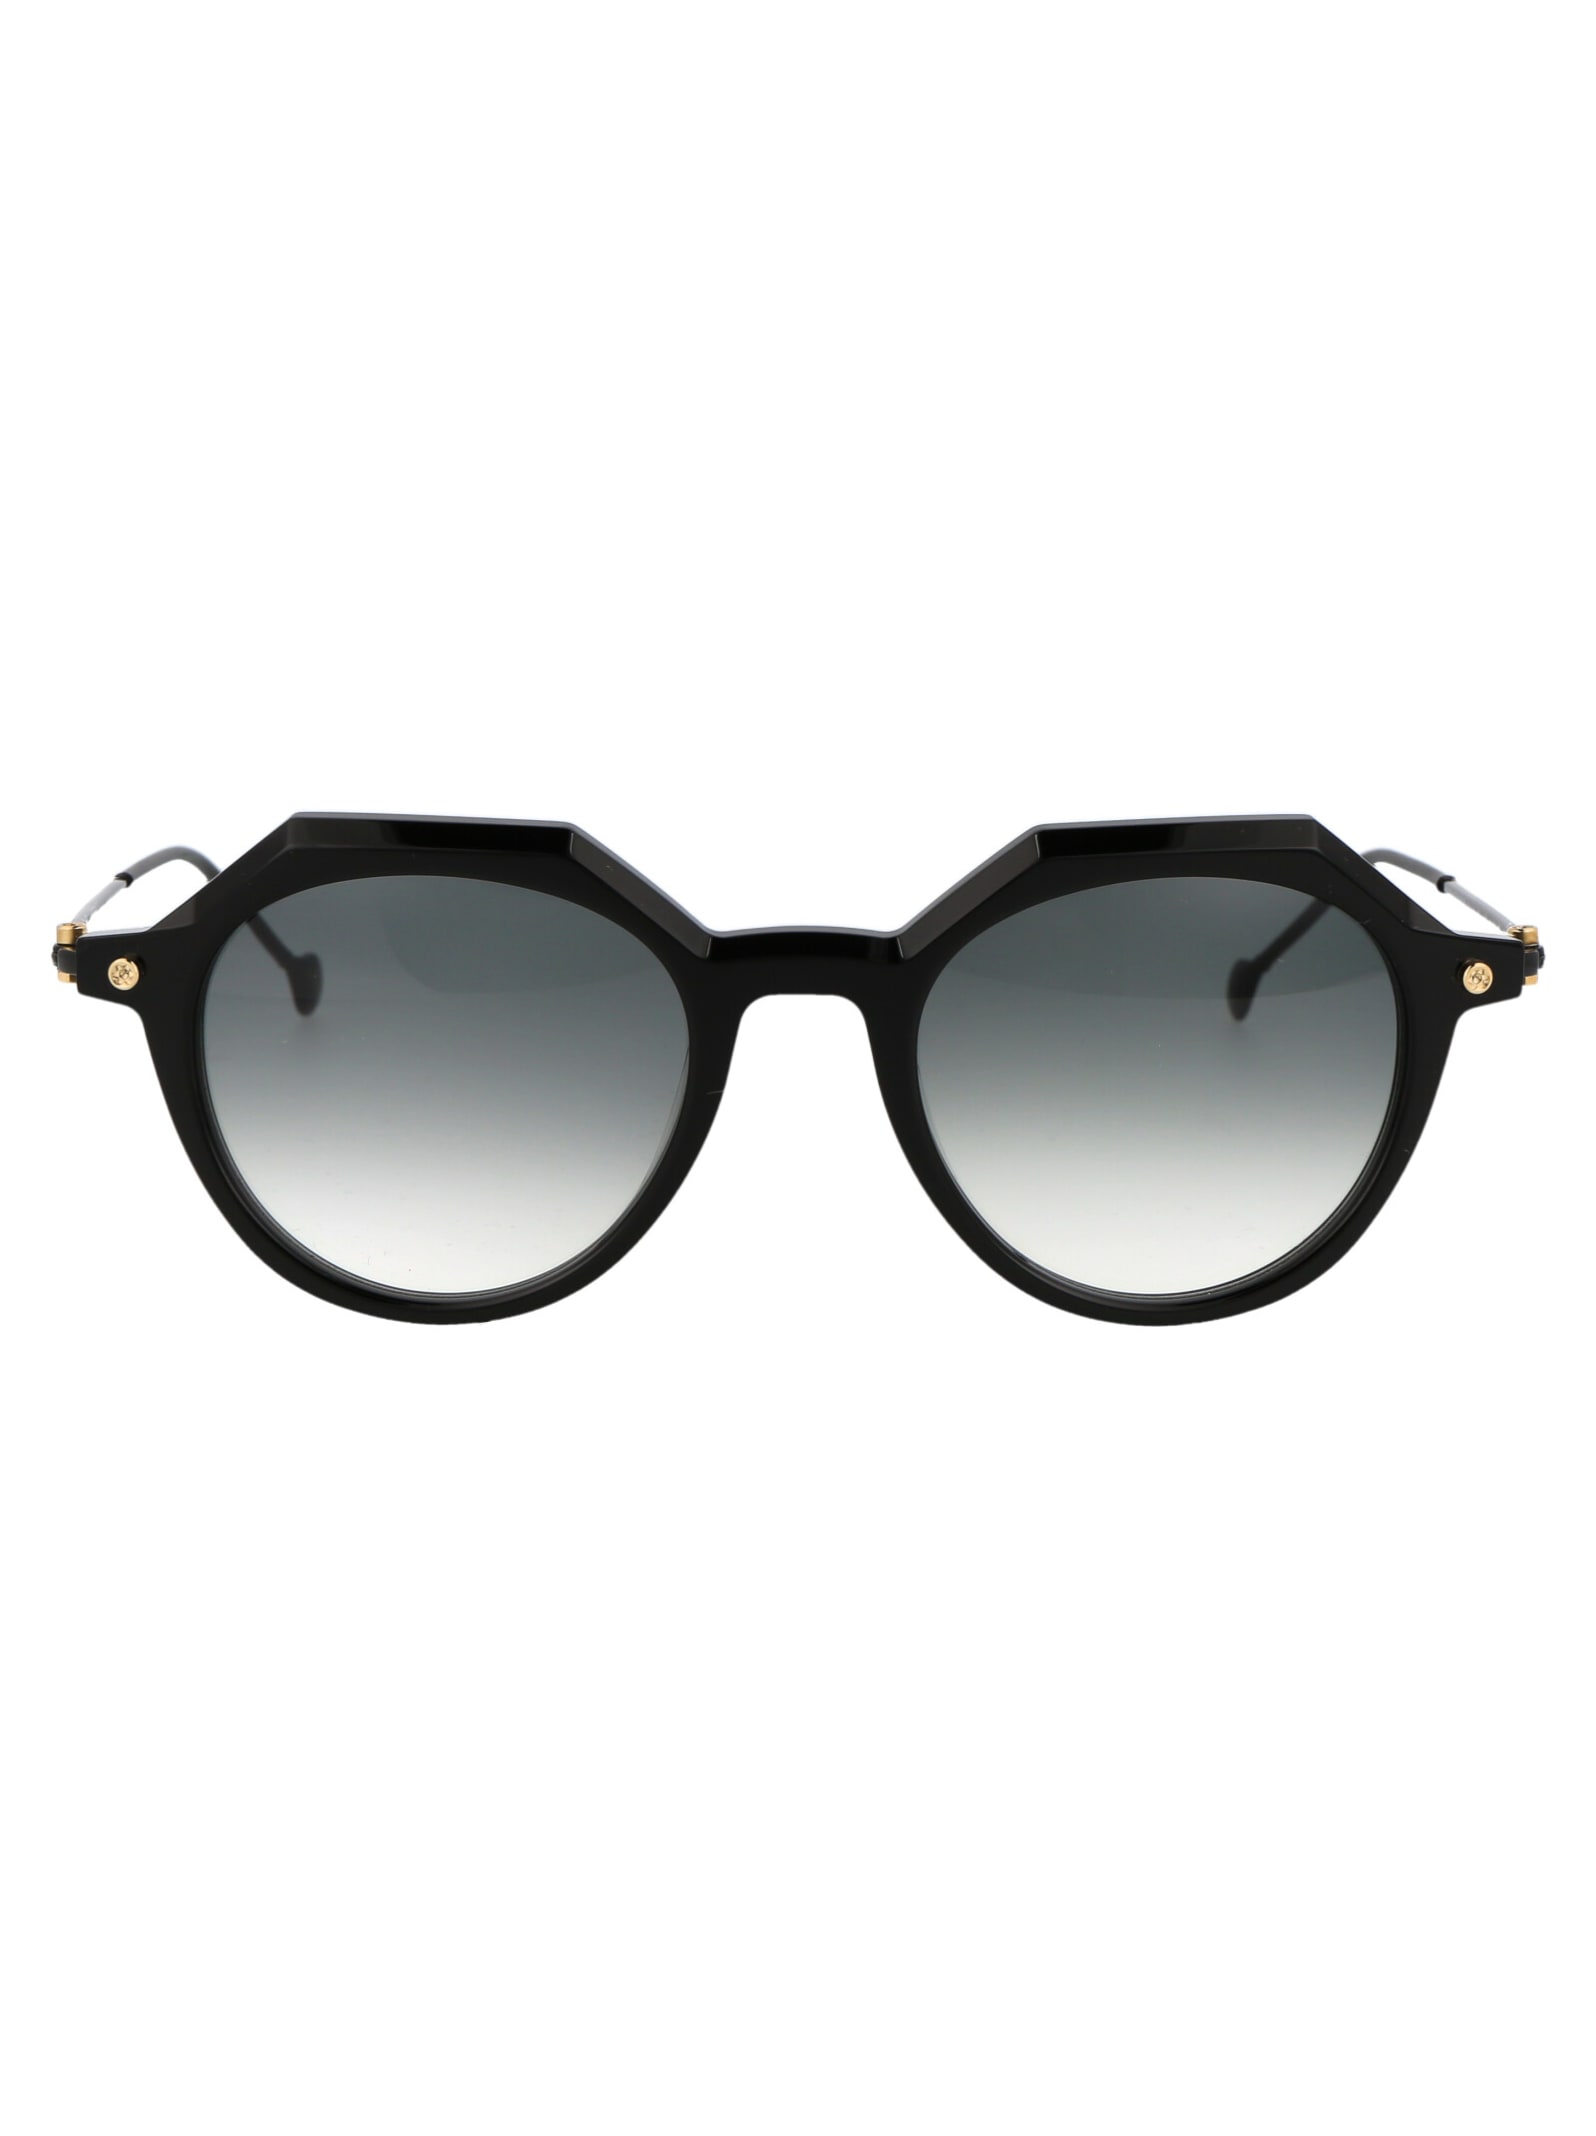 Yohji Yamamoto Slook 009 Sunglasses